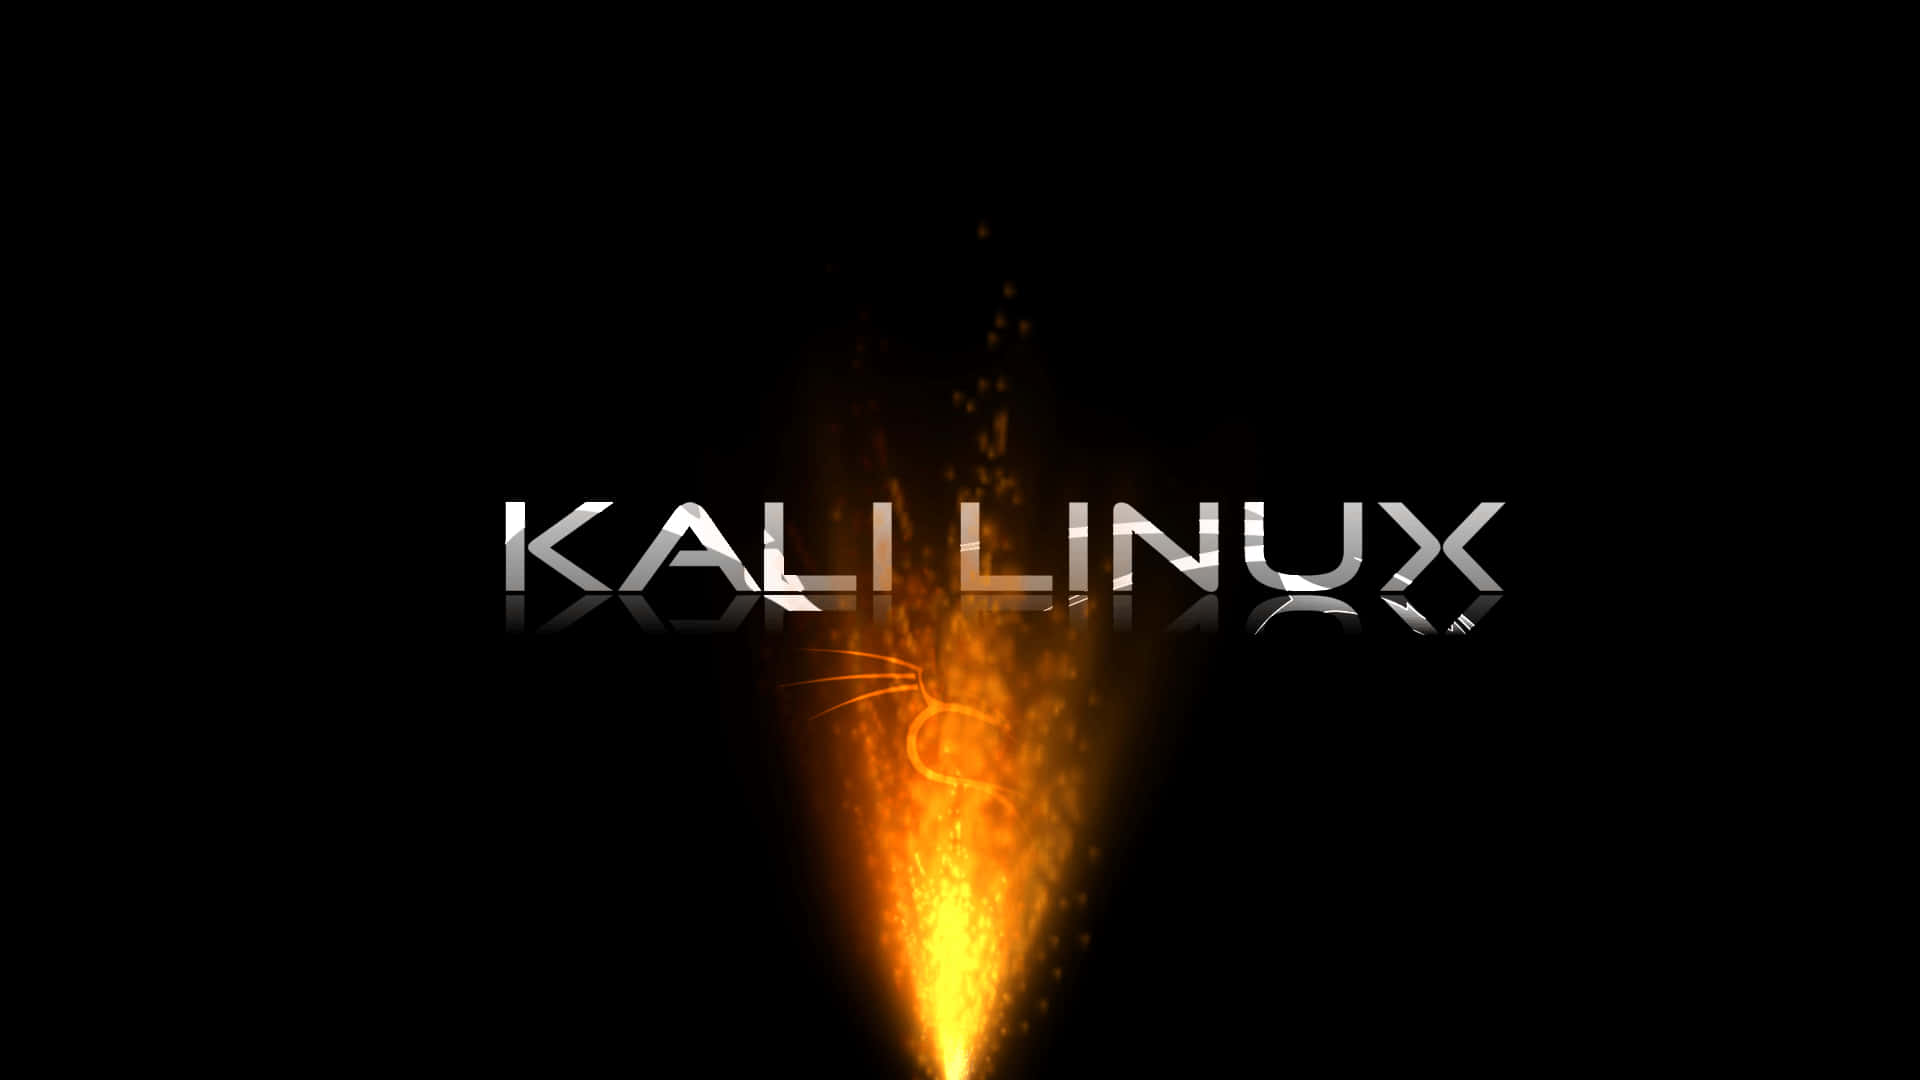 Kali Linux Wallpapers - Wallpapers For Desktop